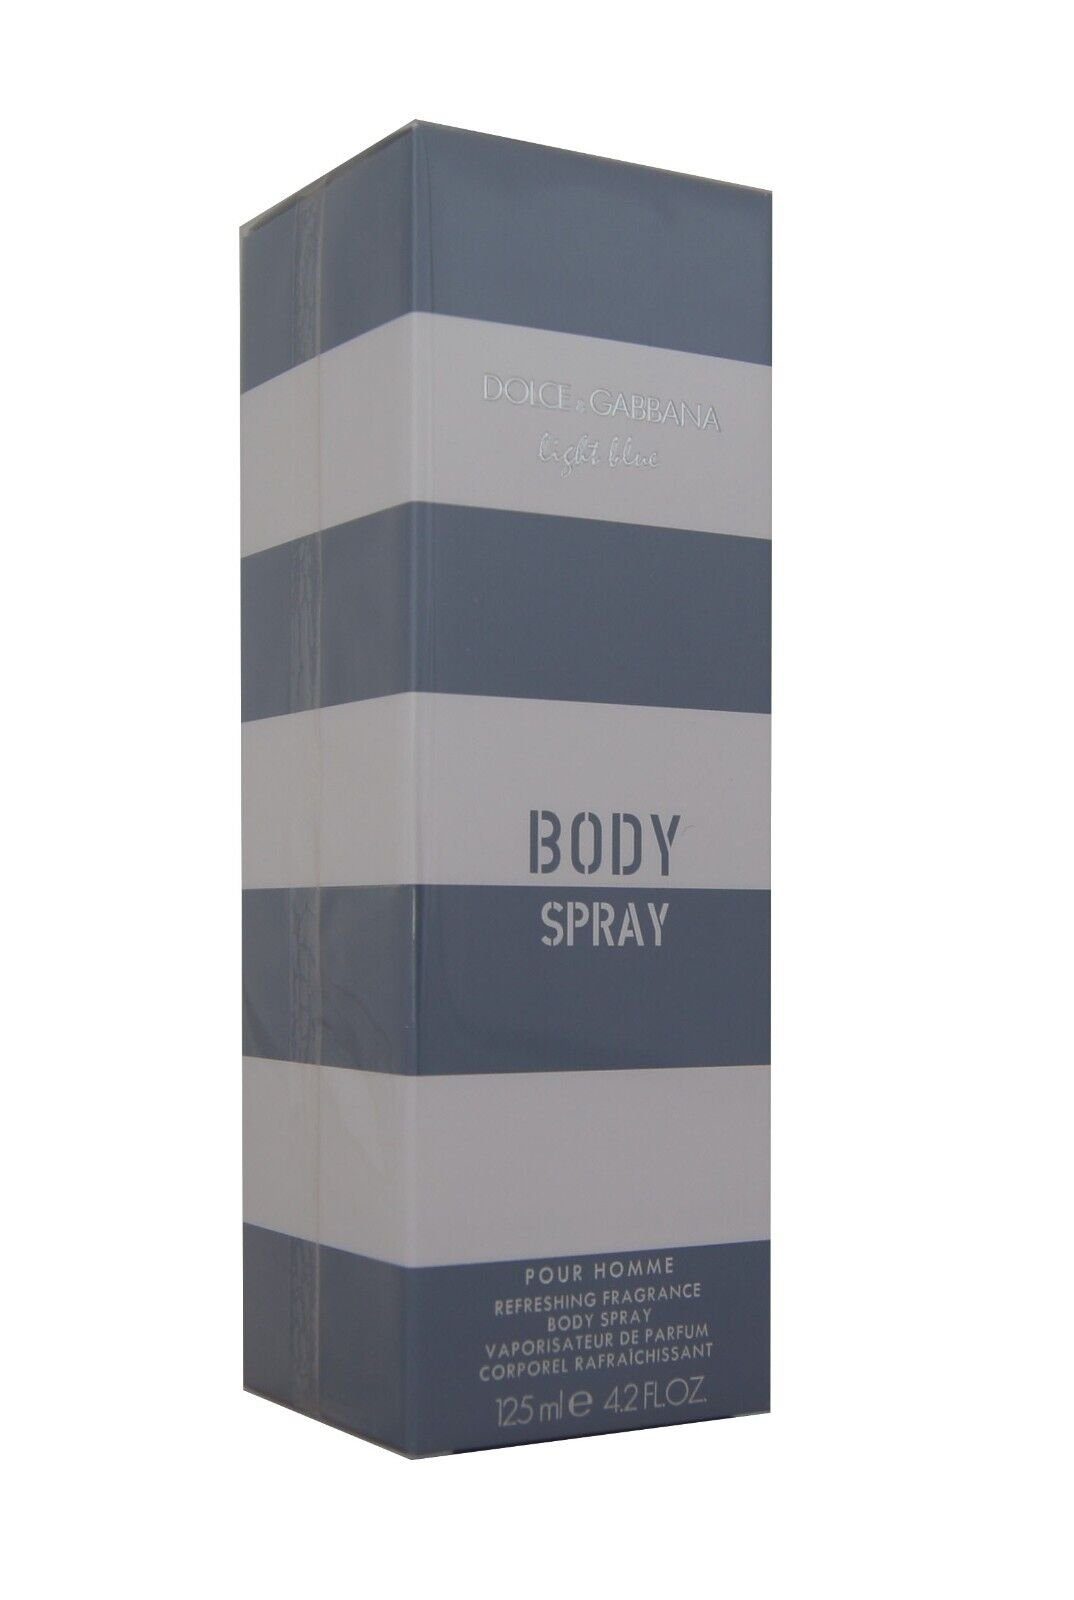 DOLCE & Light Pour Homme GABBANA Spray Body 125ml. Dolce Körperspray & Blue Gabbana